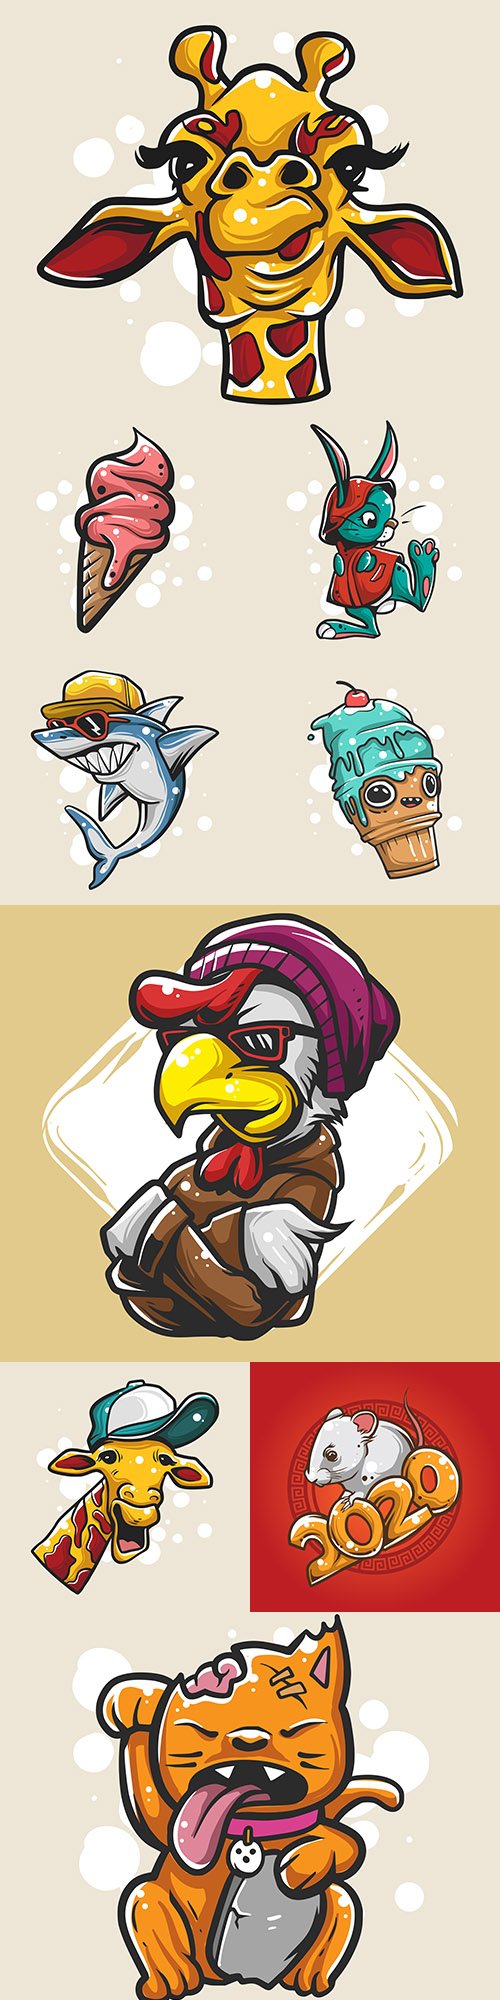 Animal head and ice cream fun design illustrations